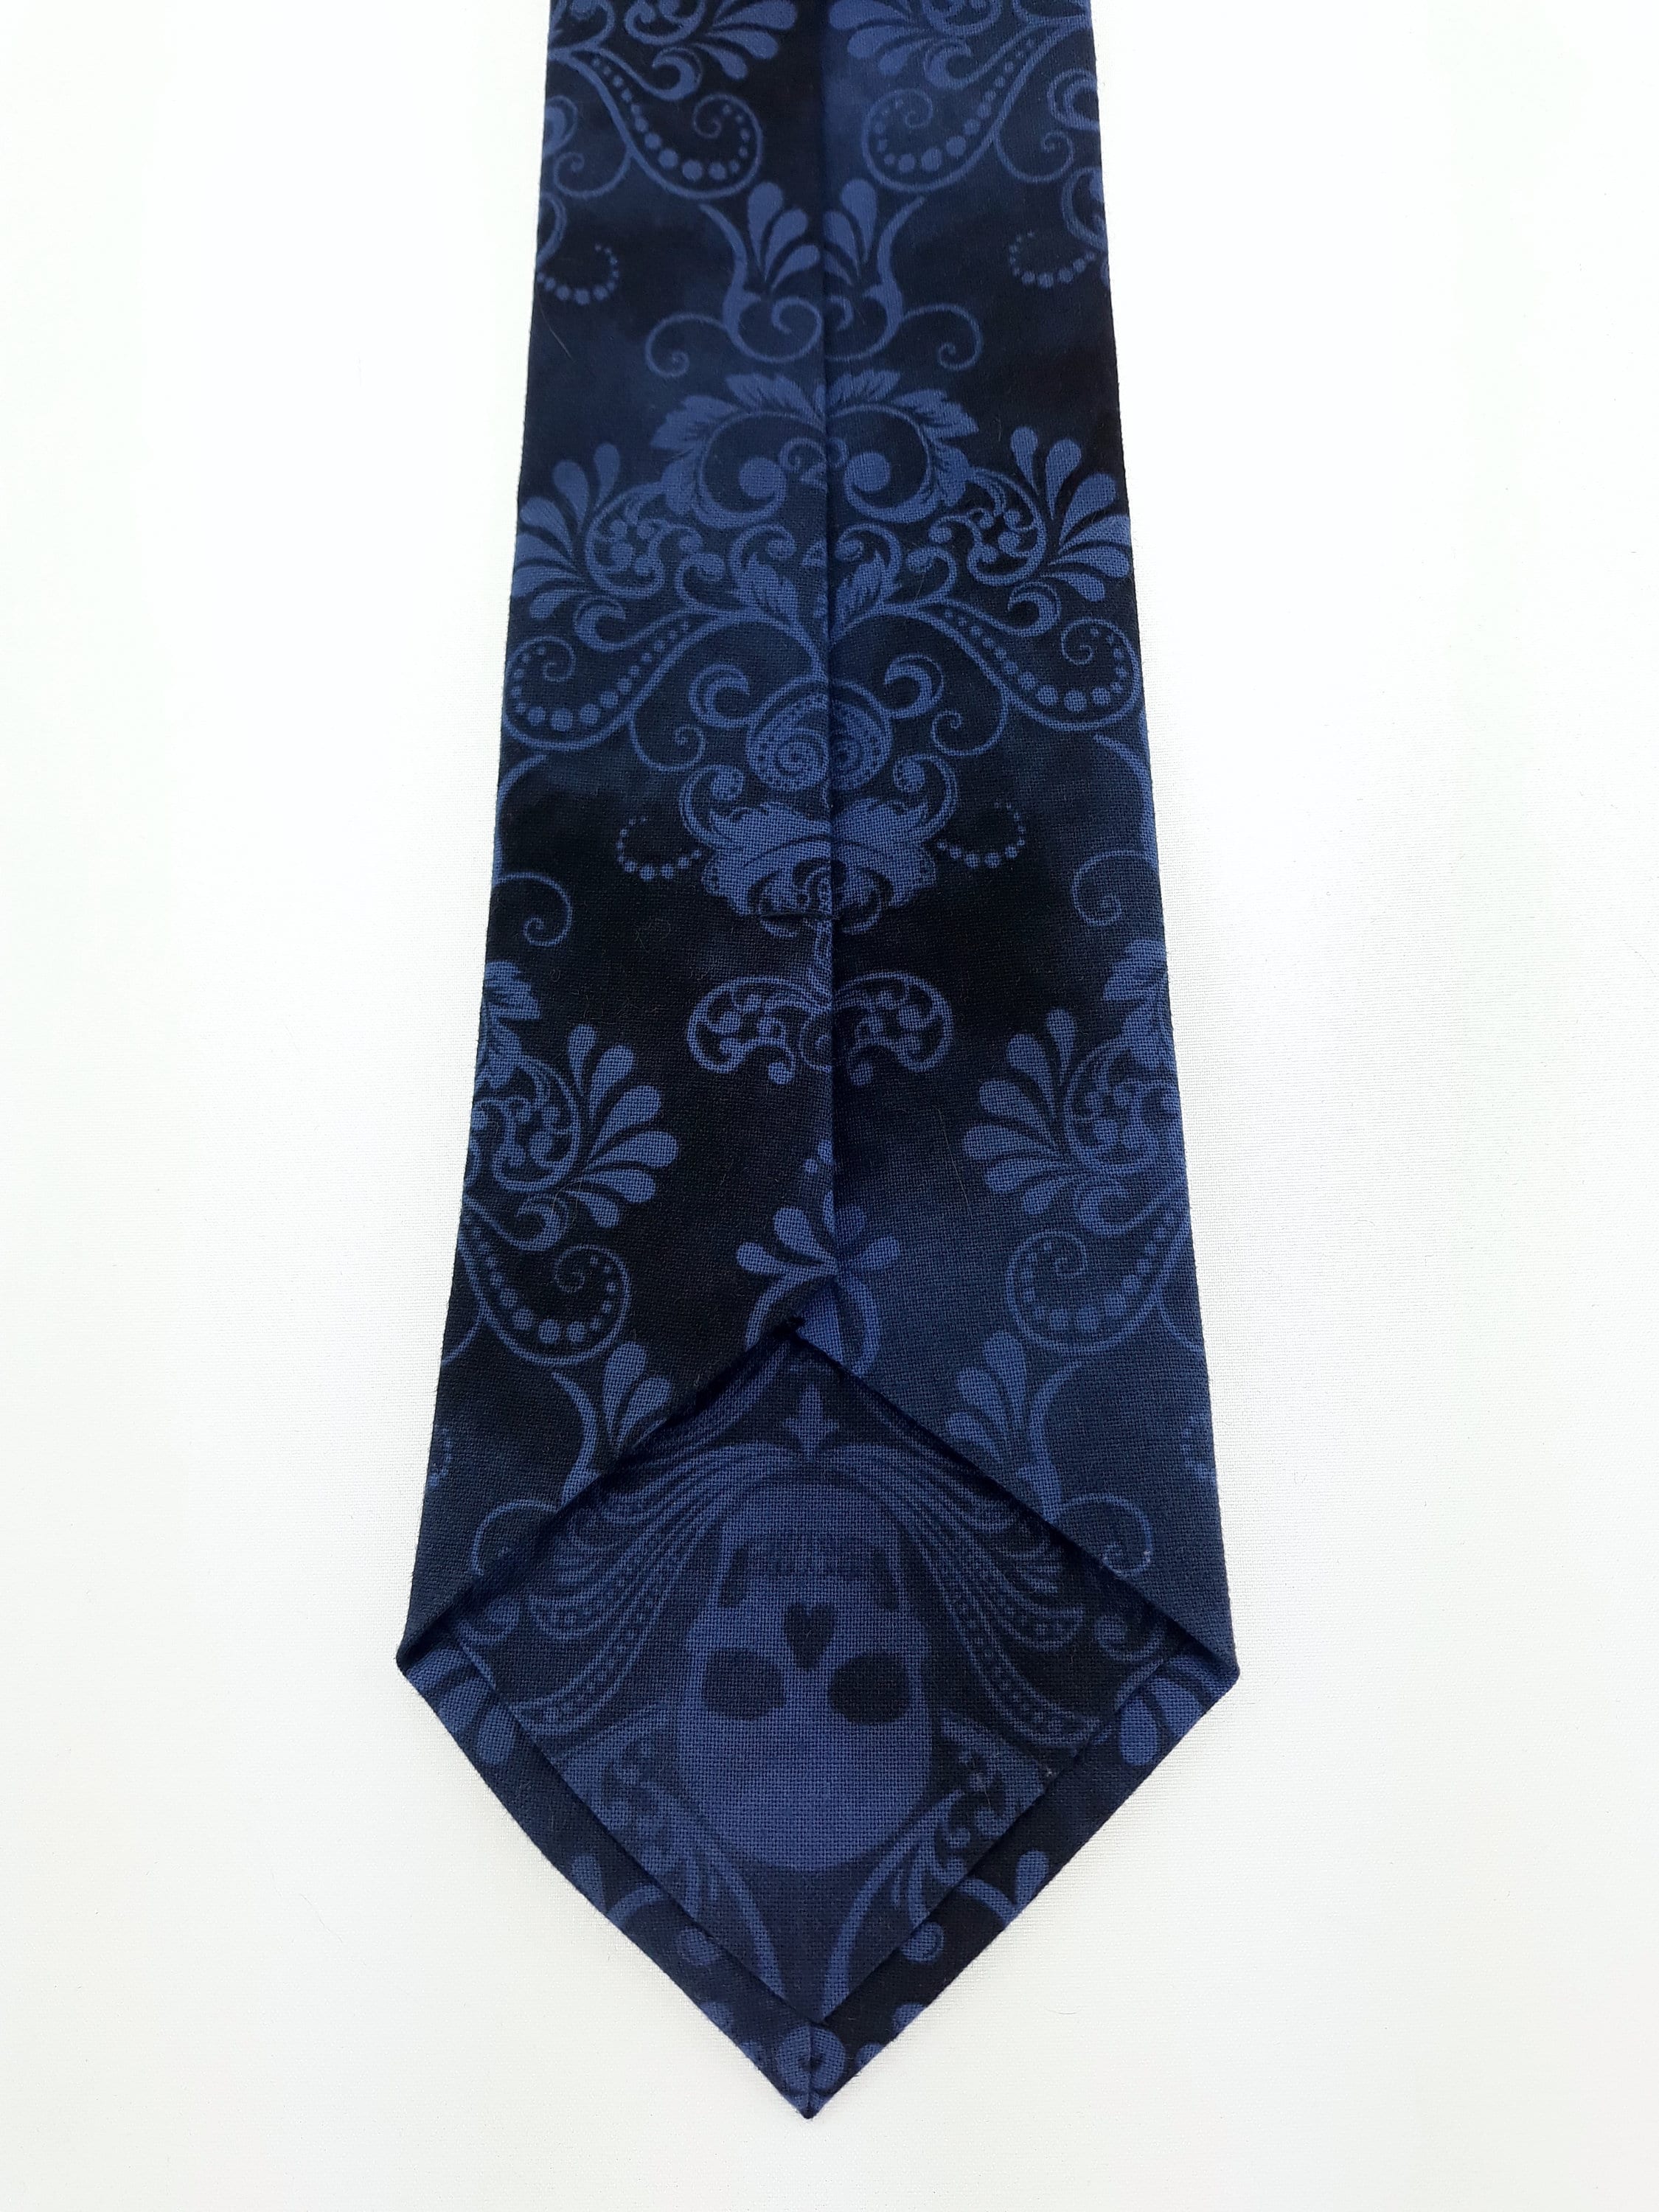 Black with Royal Blue Skull Tie – Gothic Wedding Blue Skull Neckties